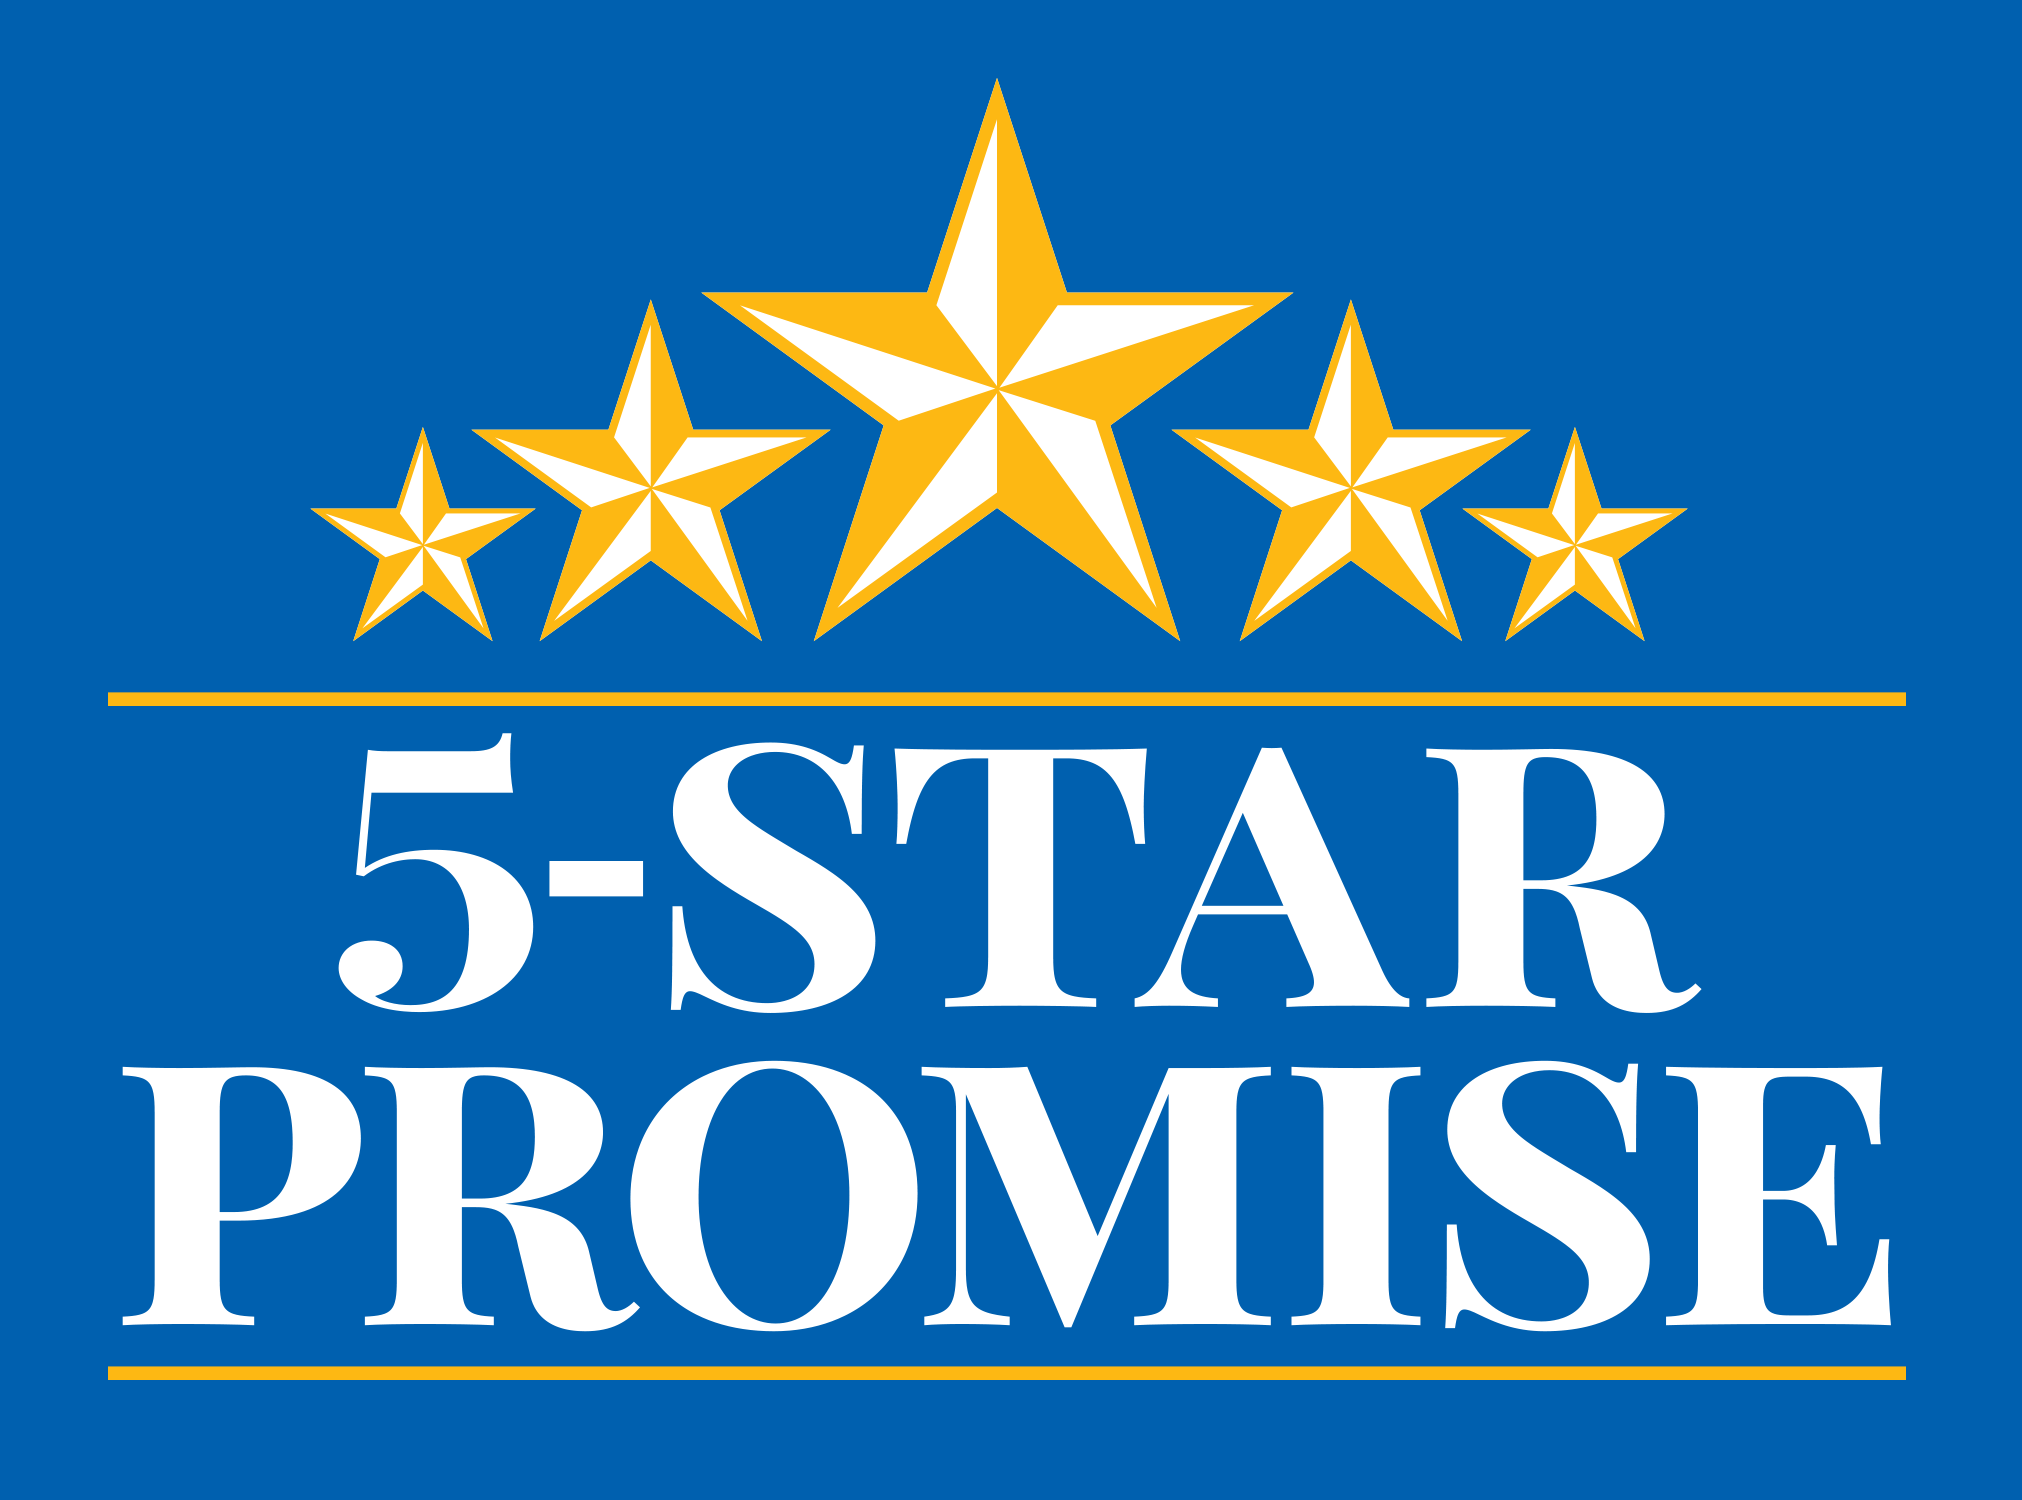 5 star promise